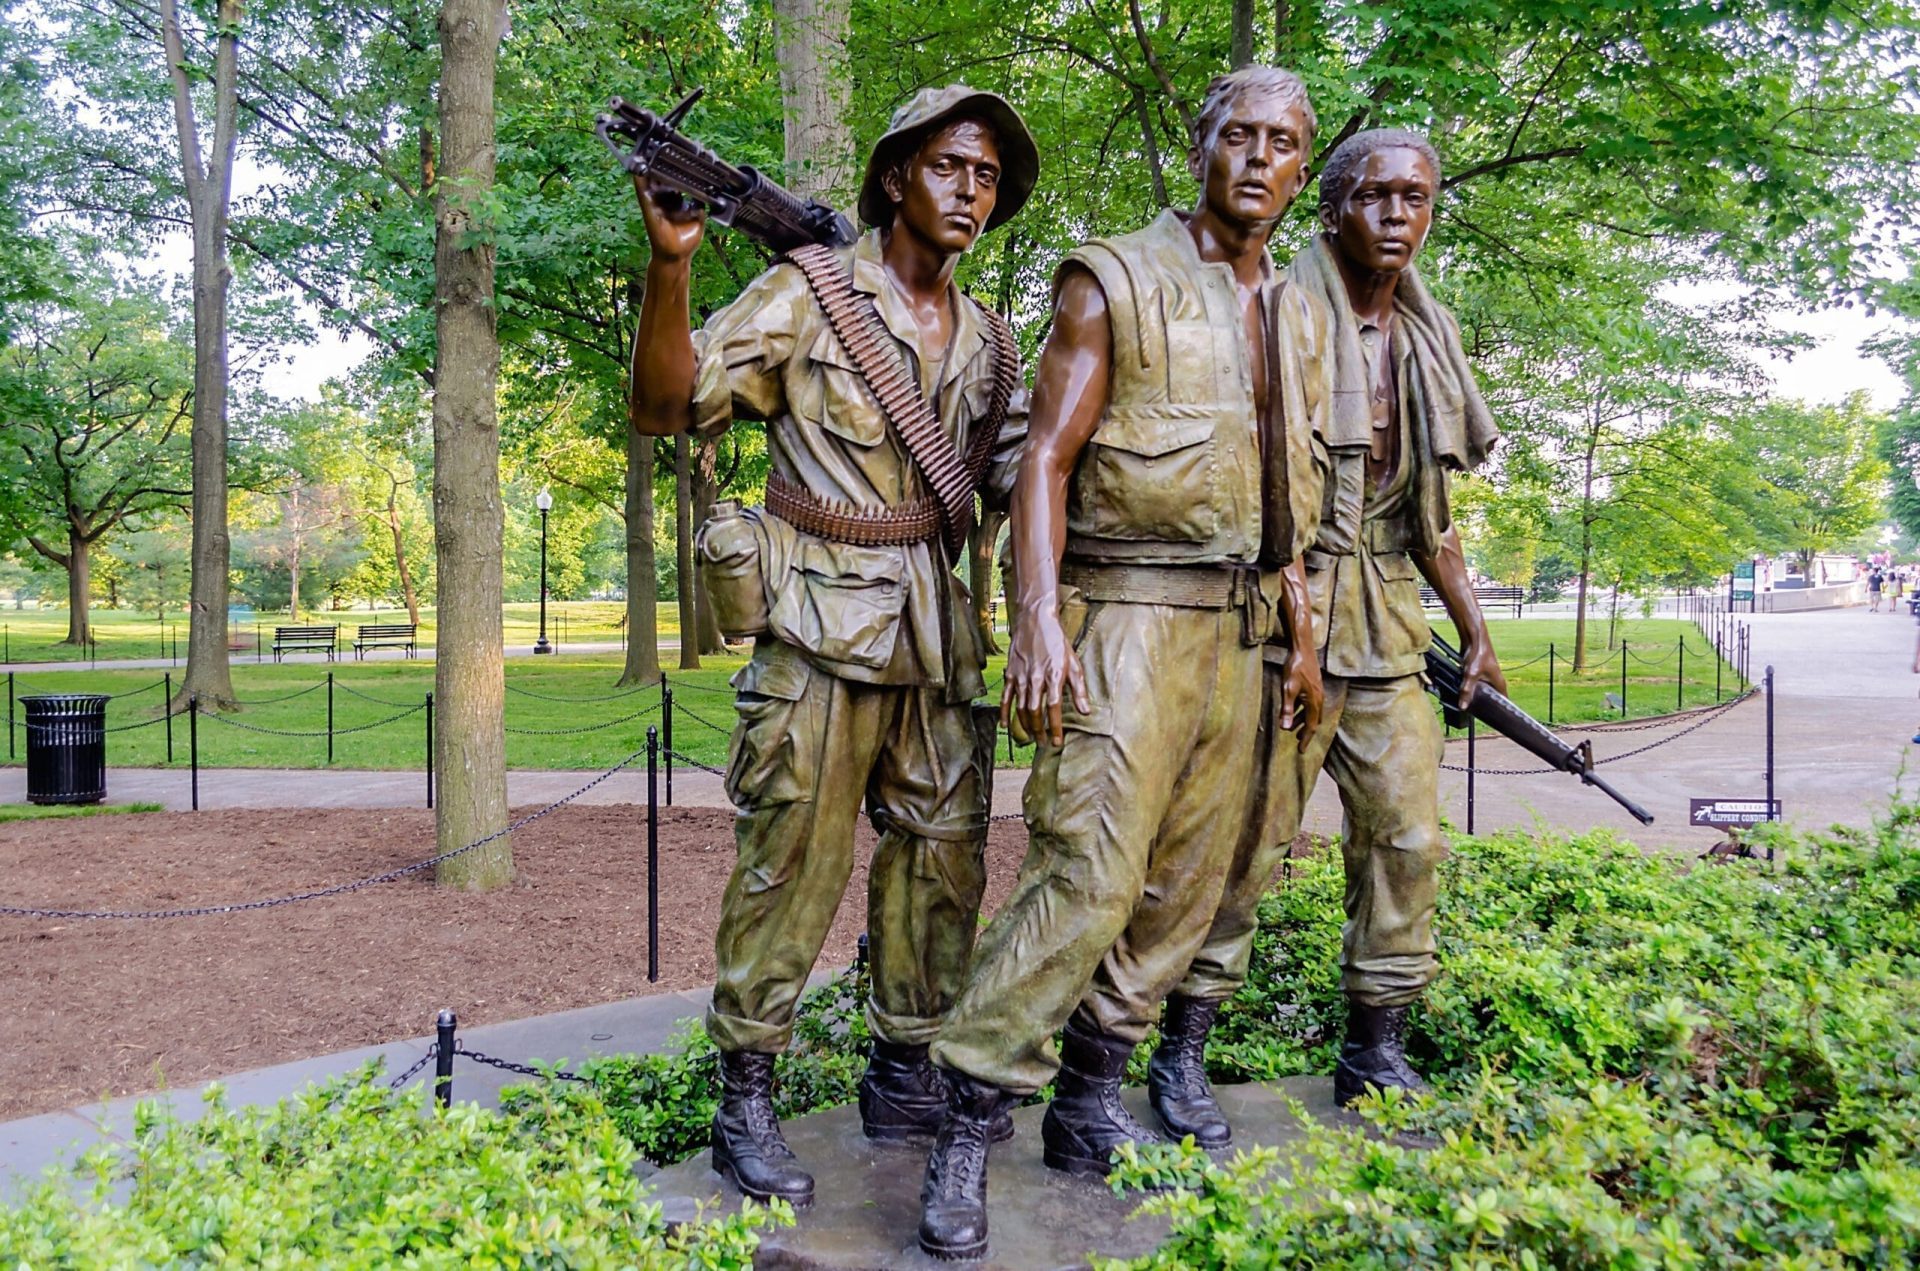 What do visitors see at the Vietnam Veterans Memorial?